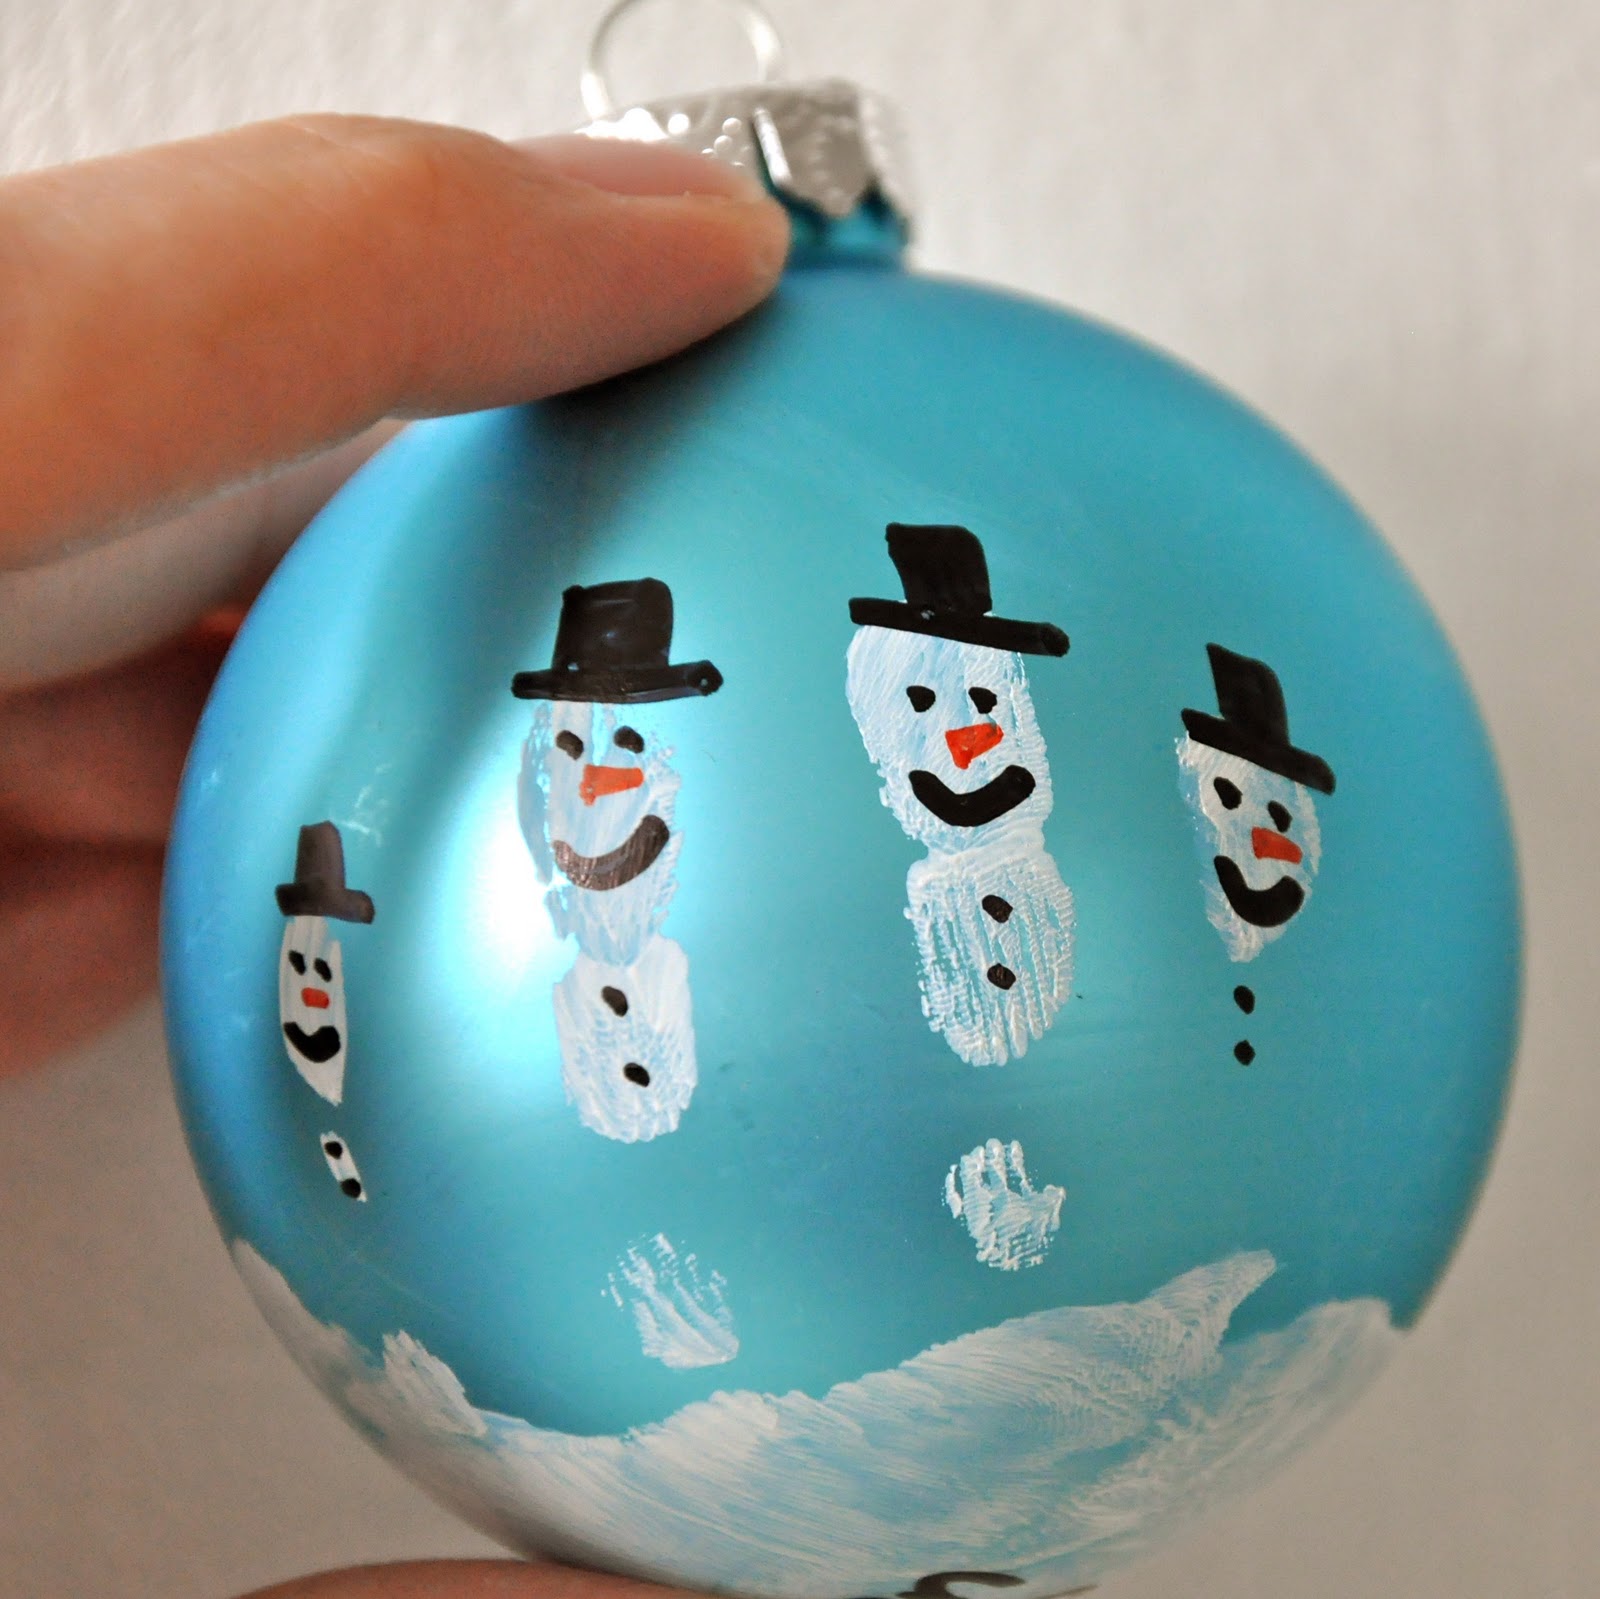 Little Bit Funky: make these now! handprint snowman ornament. :)